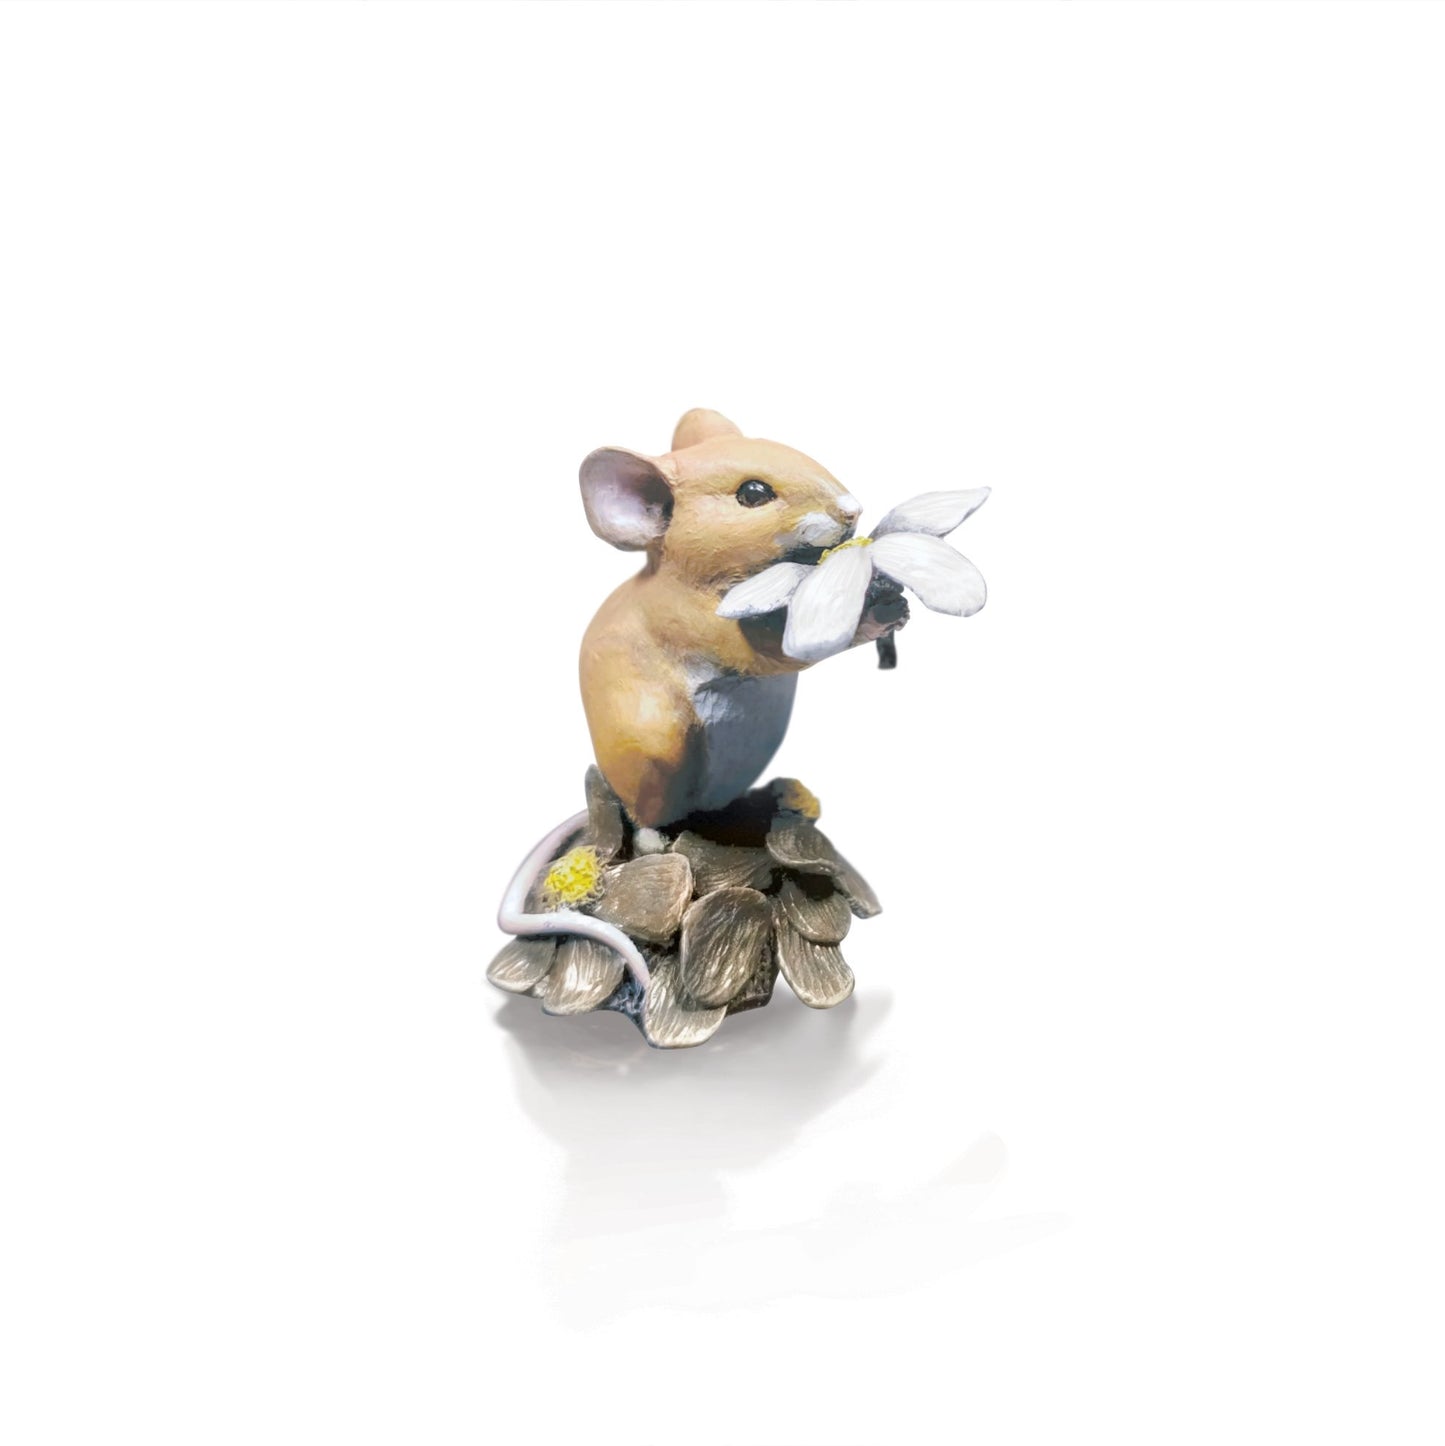 Mouse on Daisy Bronze Figurine by Michael Simpson (Richard Cooper Studio)